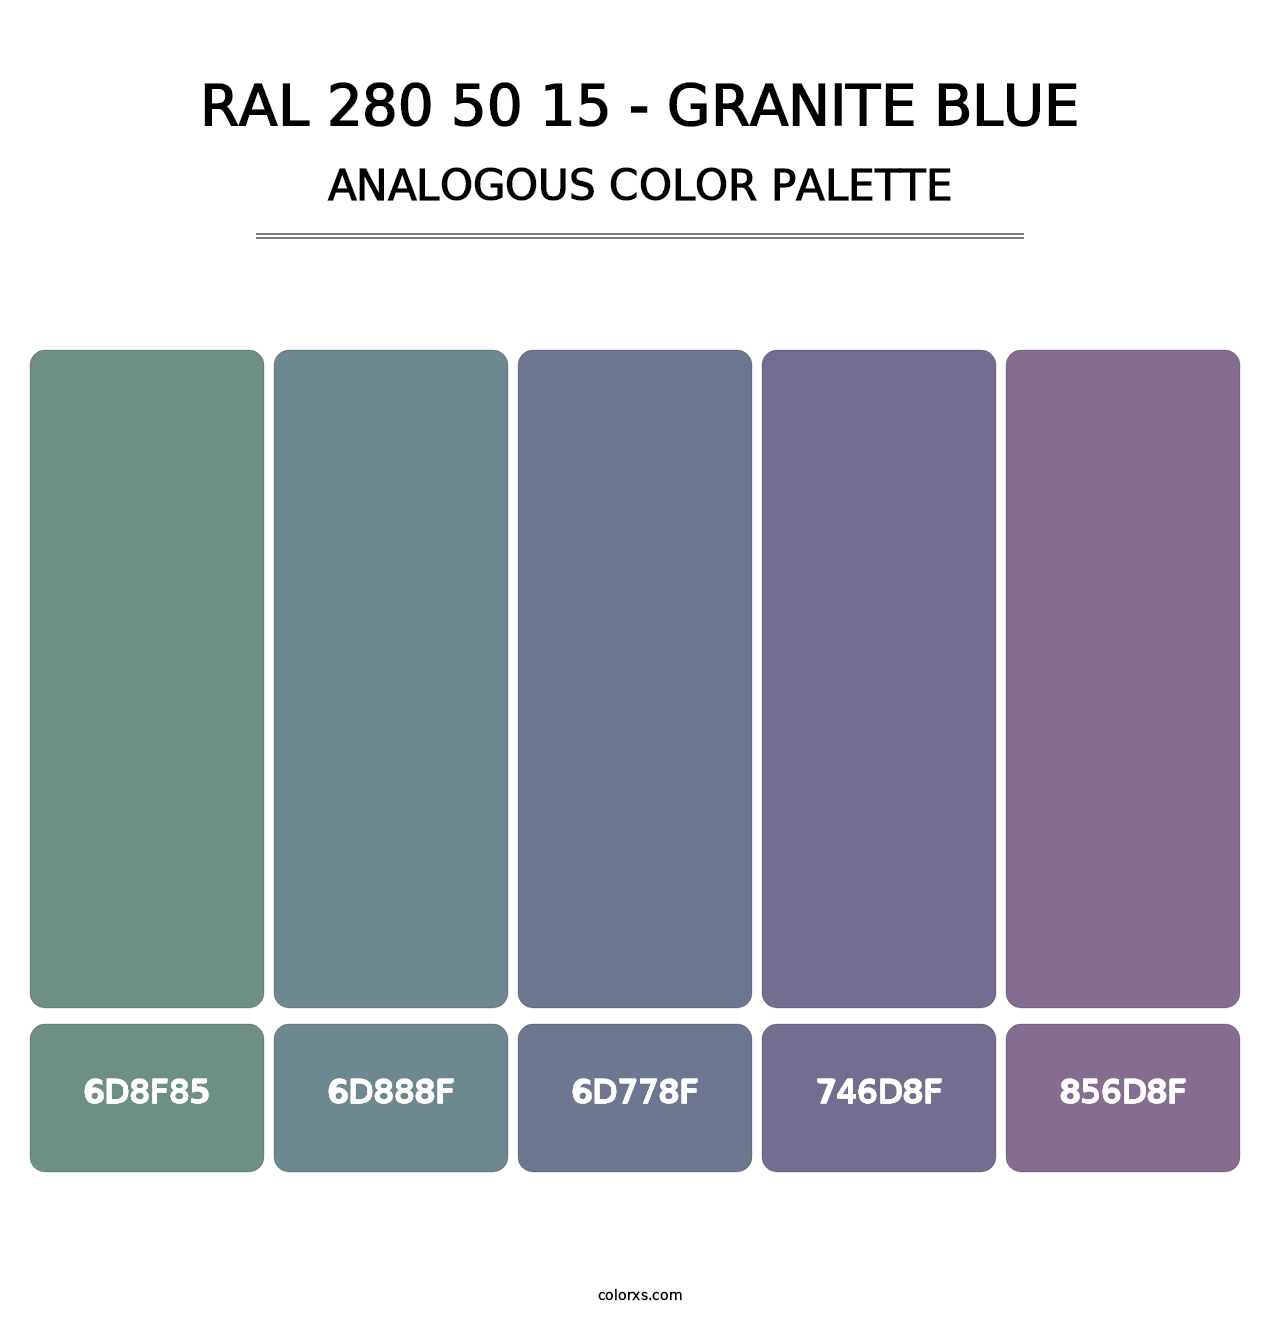 RAL 280 50 15 - Granite Blue - Analogous Color Palette